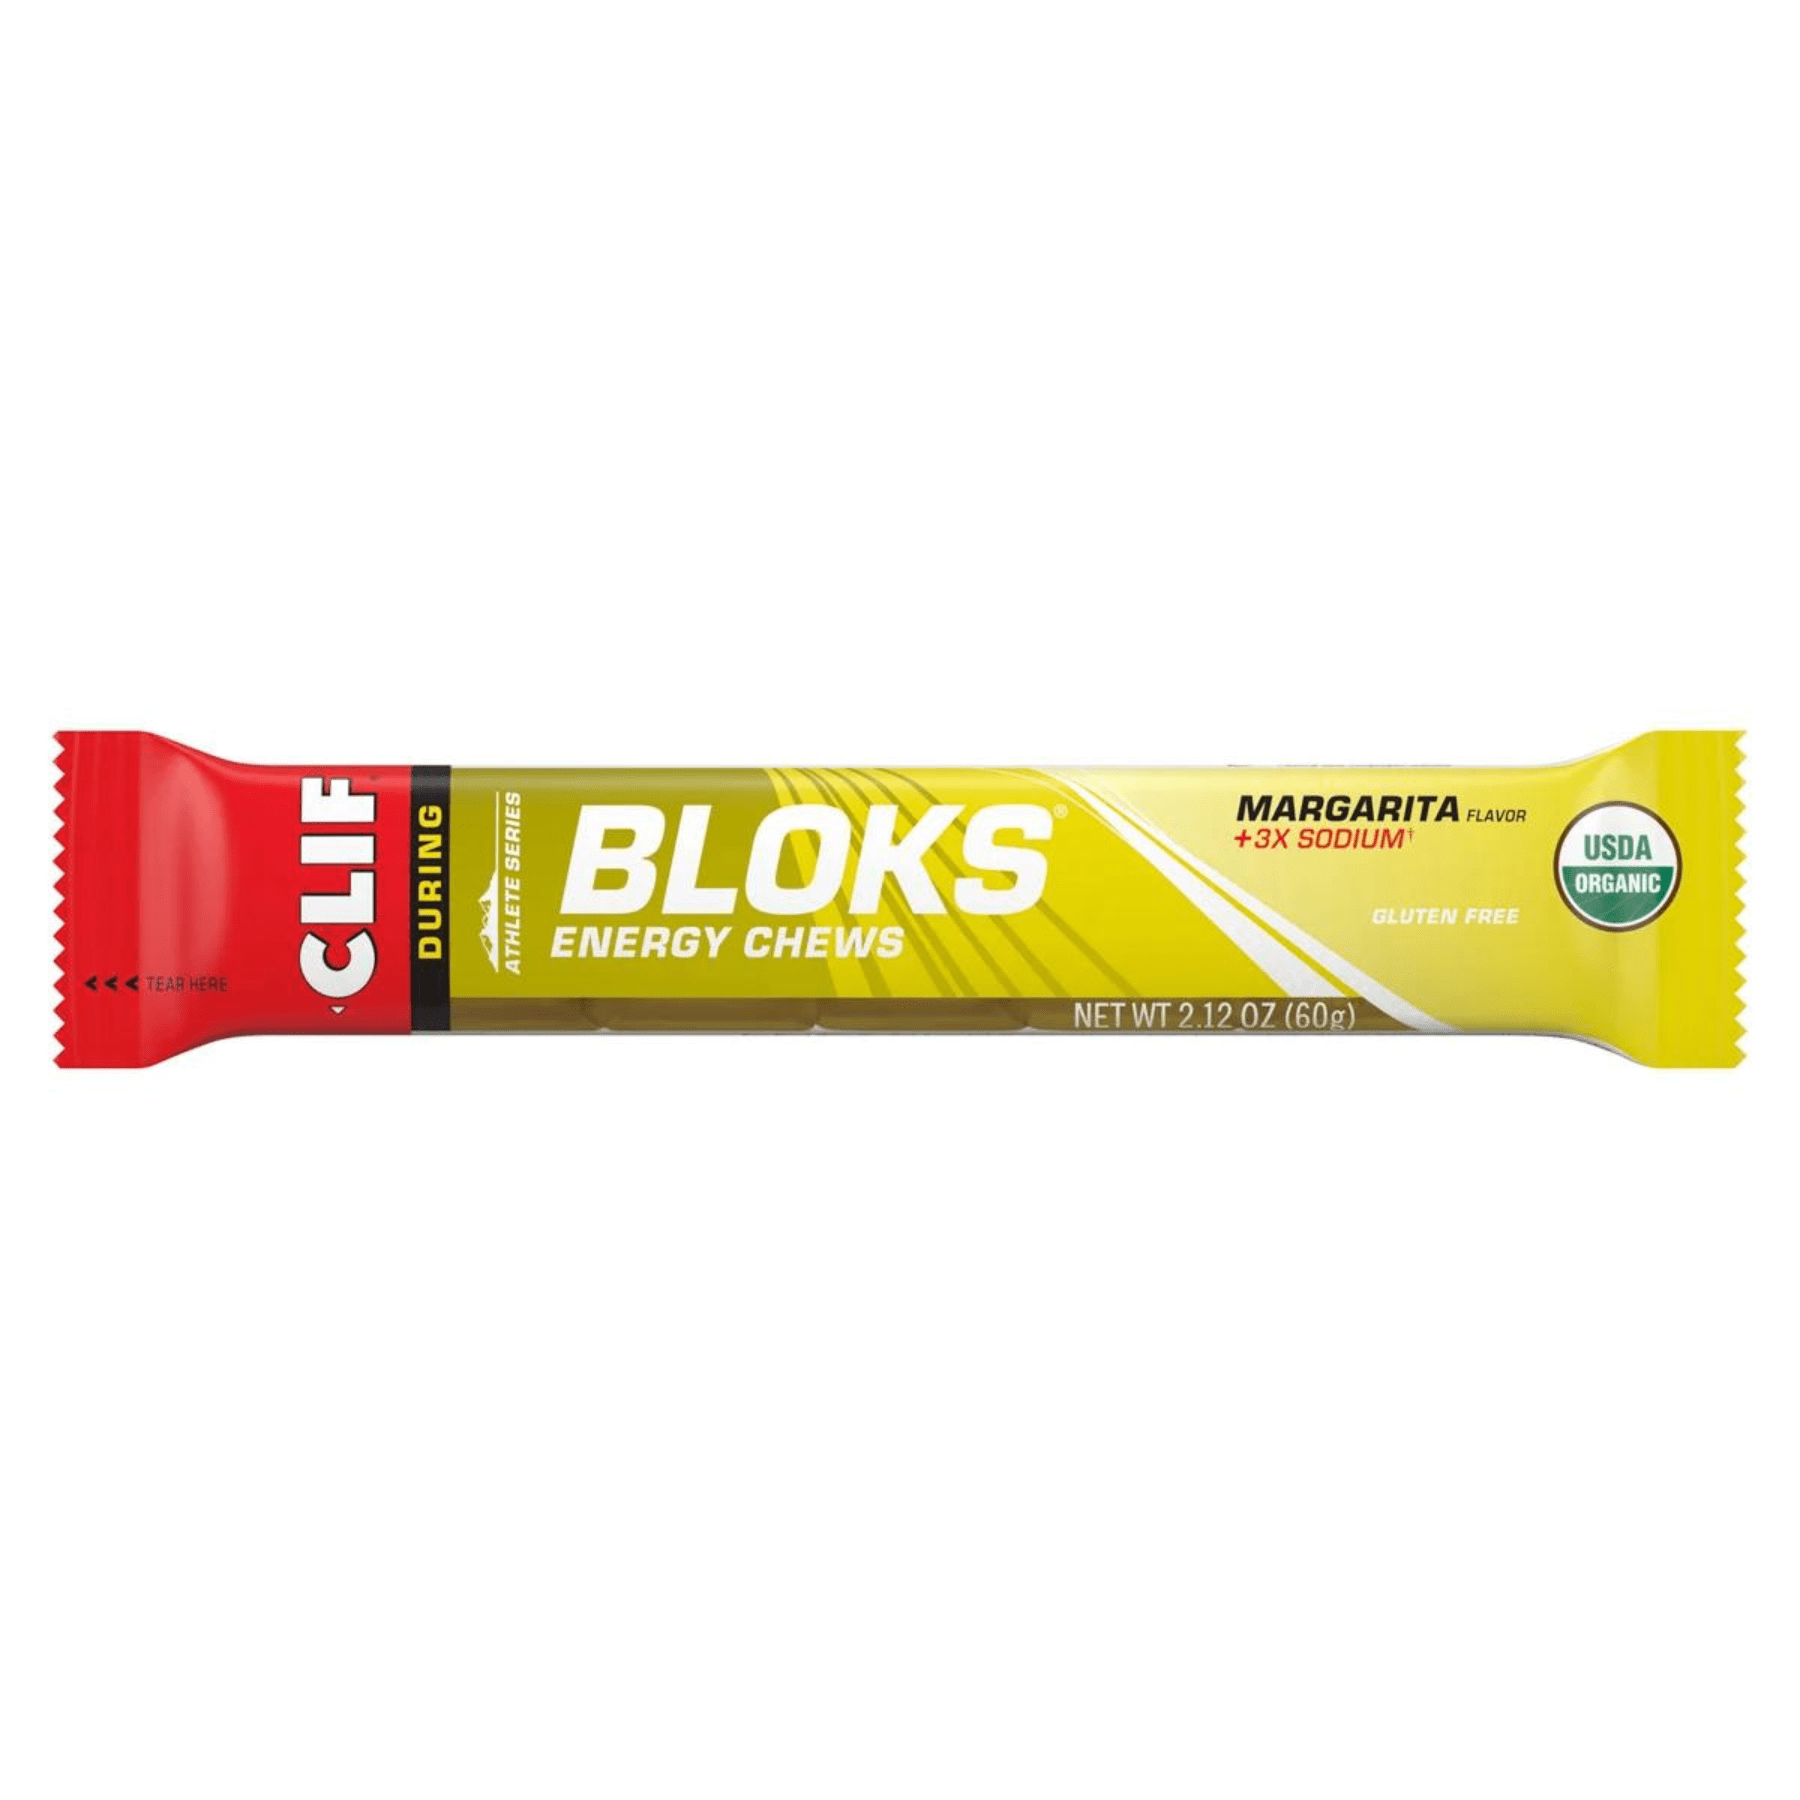 clif Energy Chews 1 / Margarita (150mg Sodium) BLOKS Energy Chews CLIF561